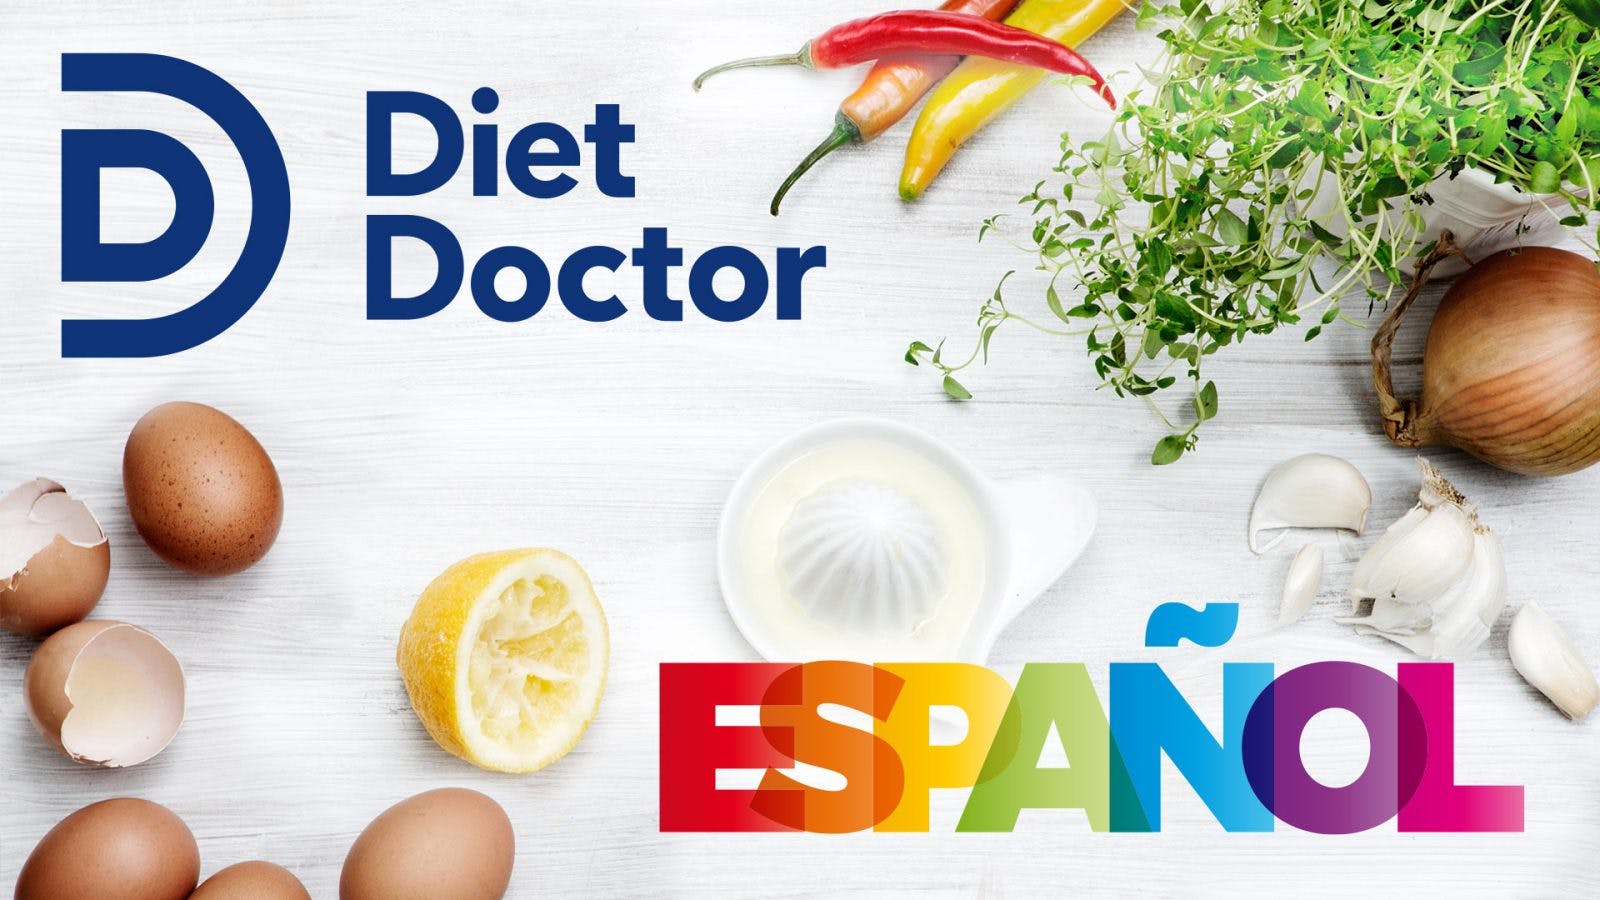 Diabetes Diet In Spanish - The Guide Ways